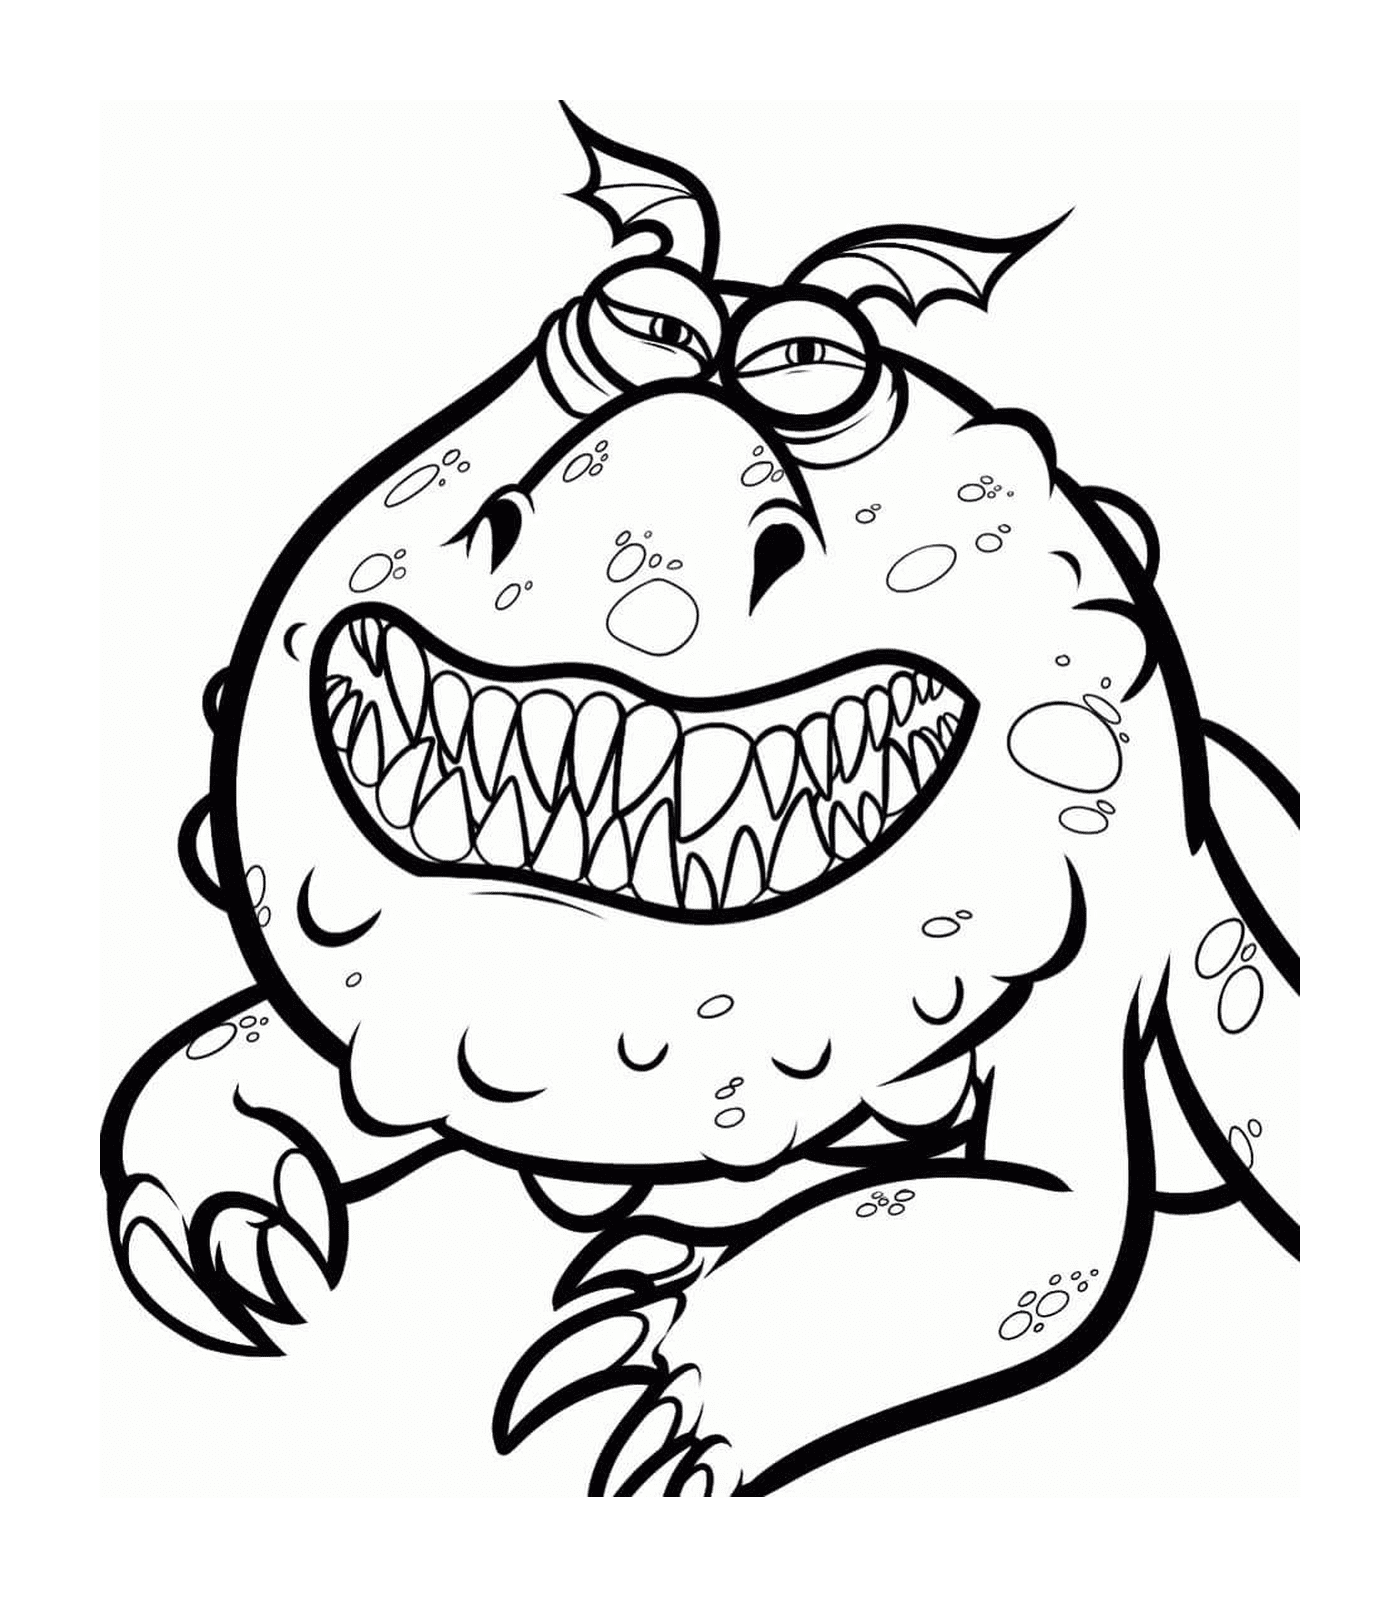  Meatlug, a monster with a big smile 